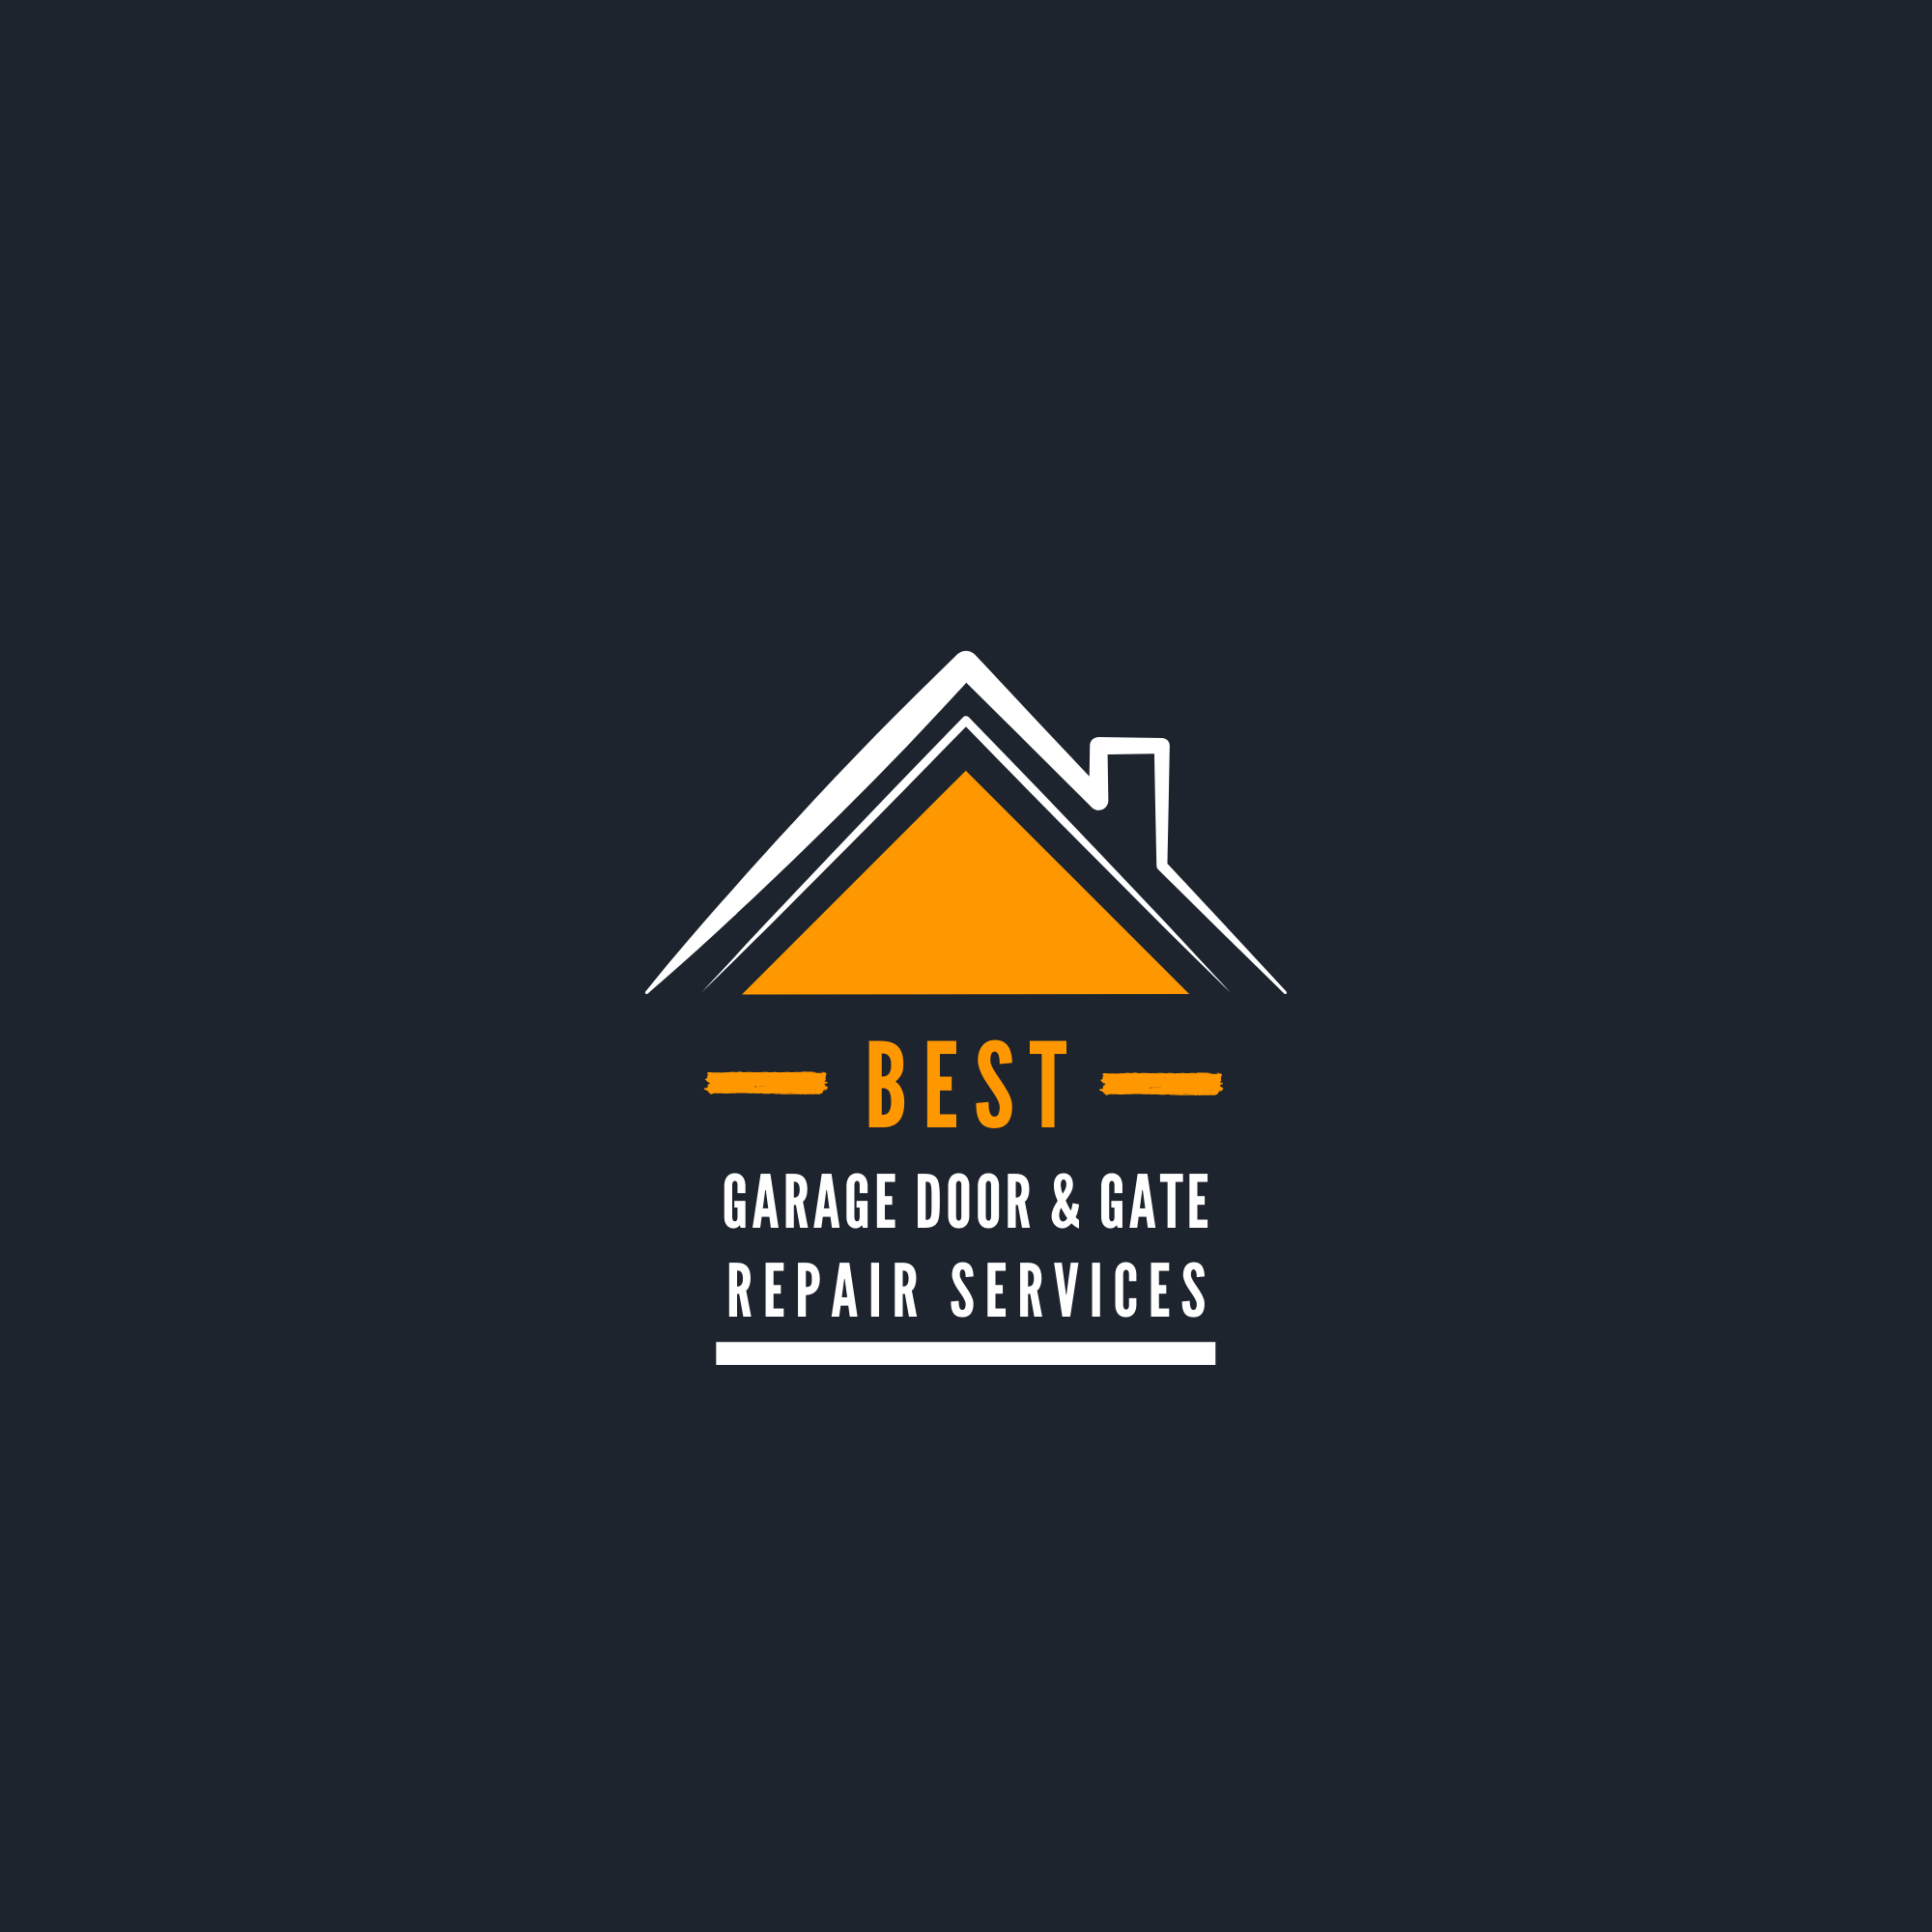 Best Garage Door & Gate Repair Services Logo